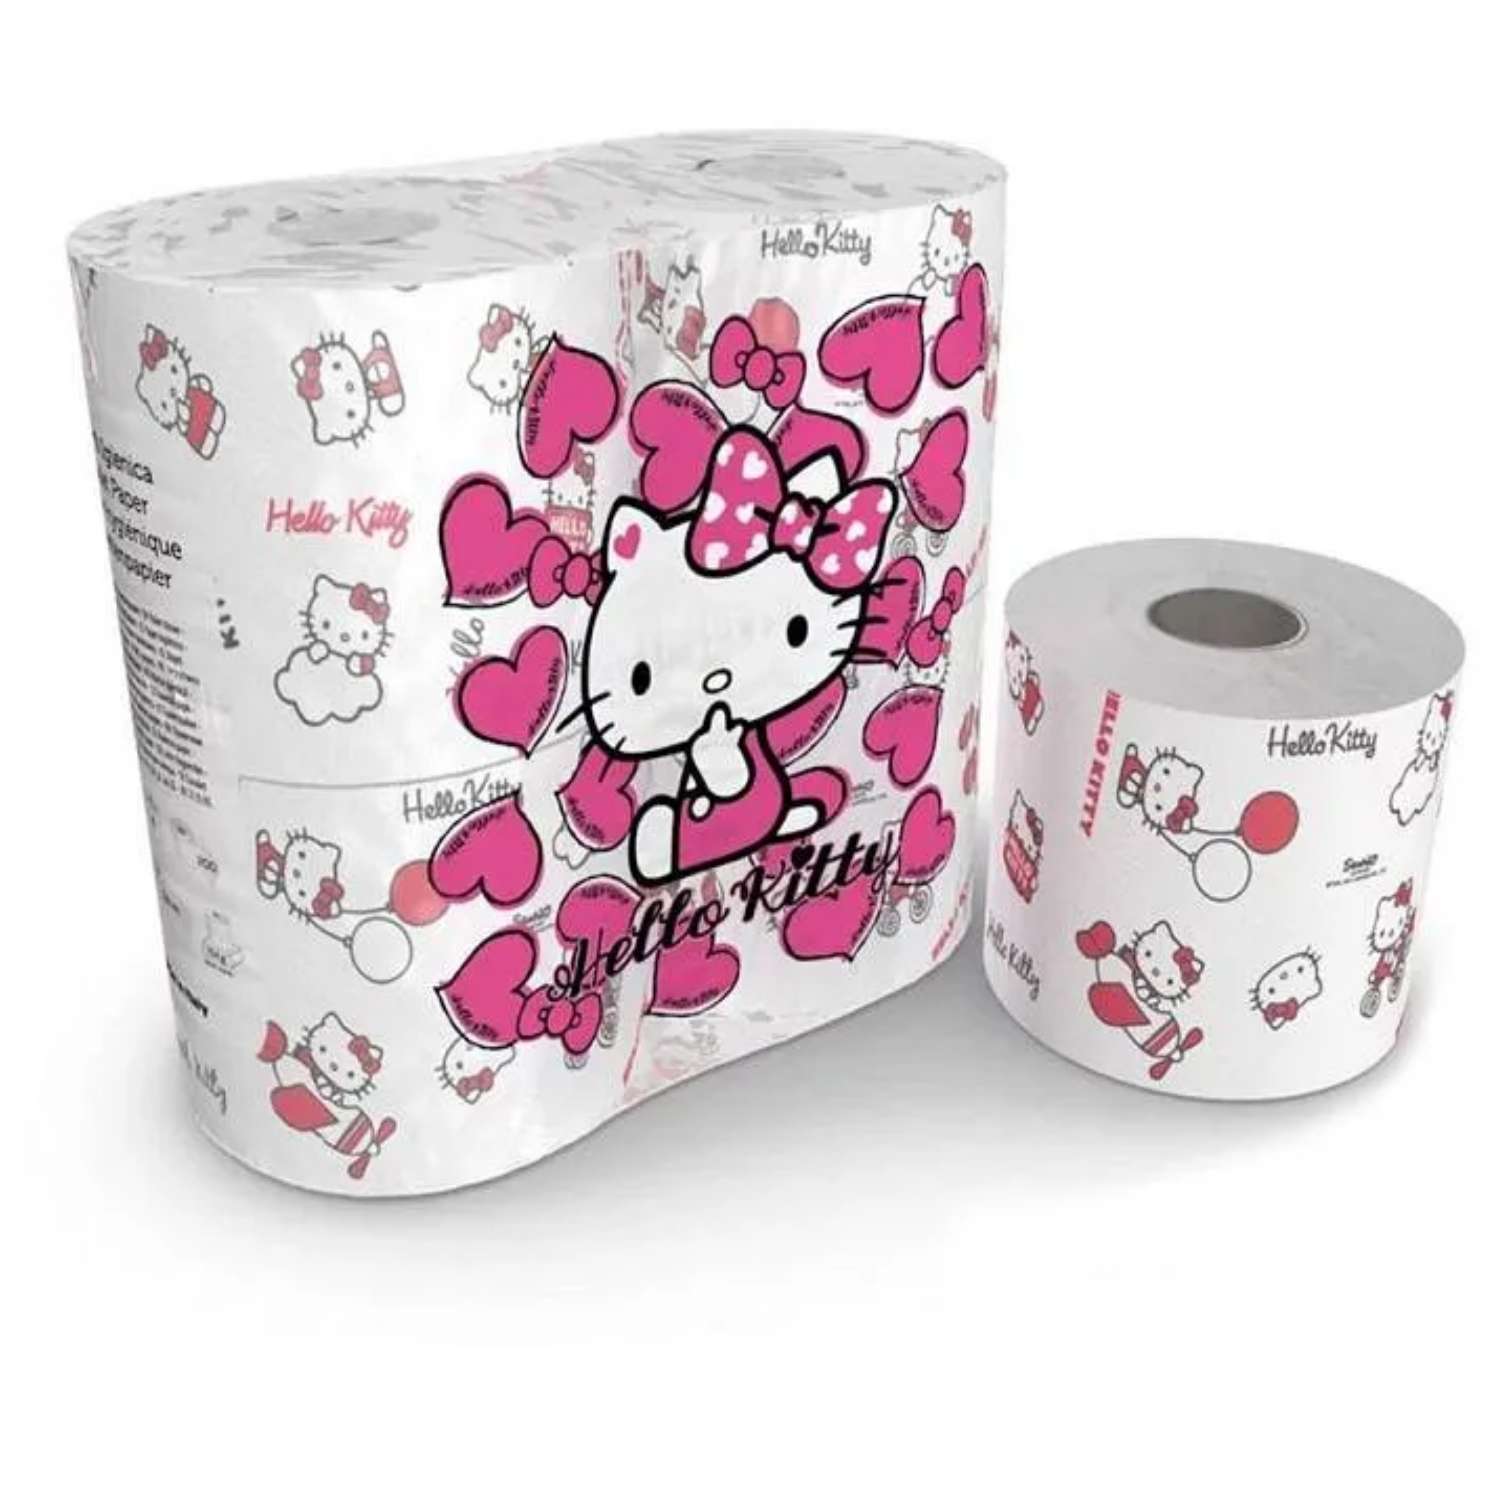 Туалетная бумага World cart с рисунком Hello Kitty 3 слоя 4 рулона по 200 листов - фото 1